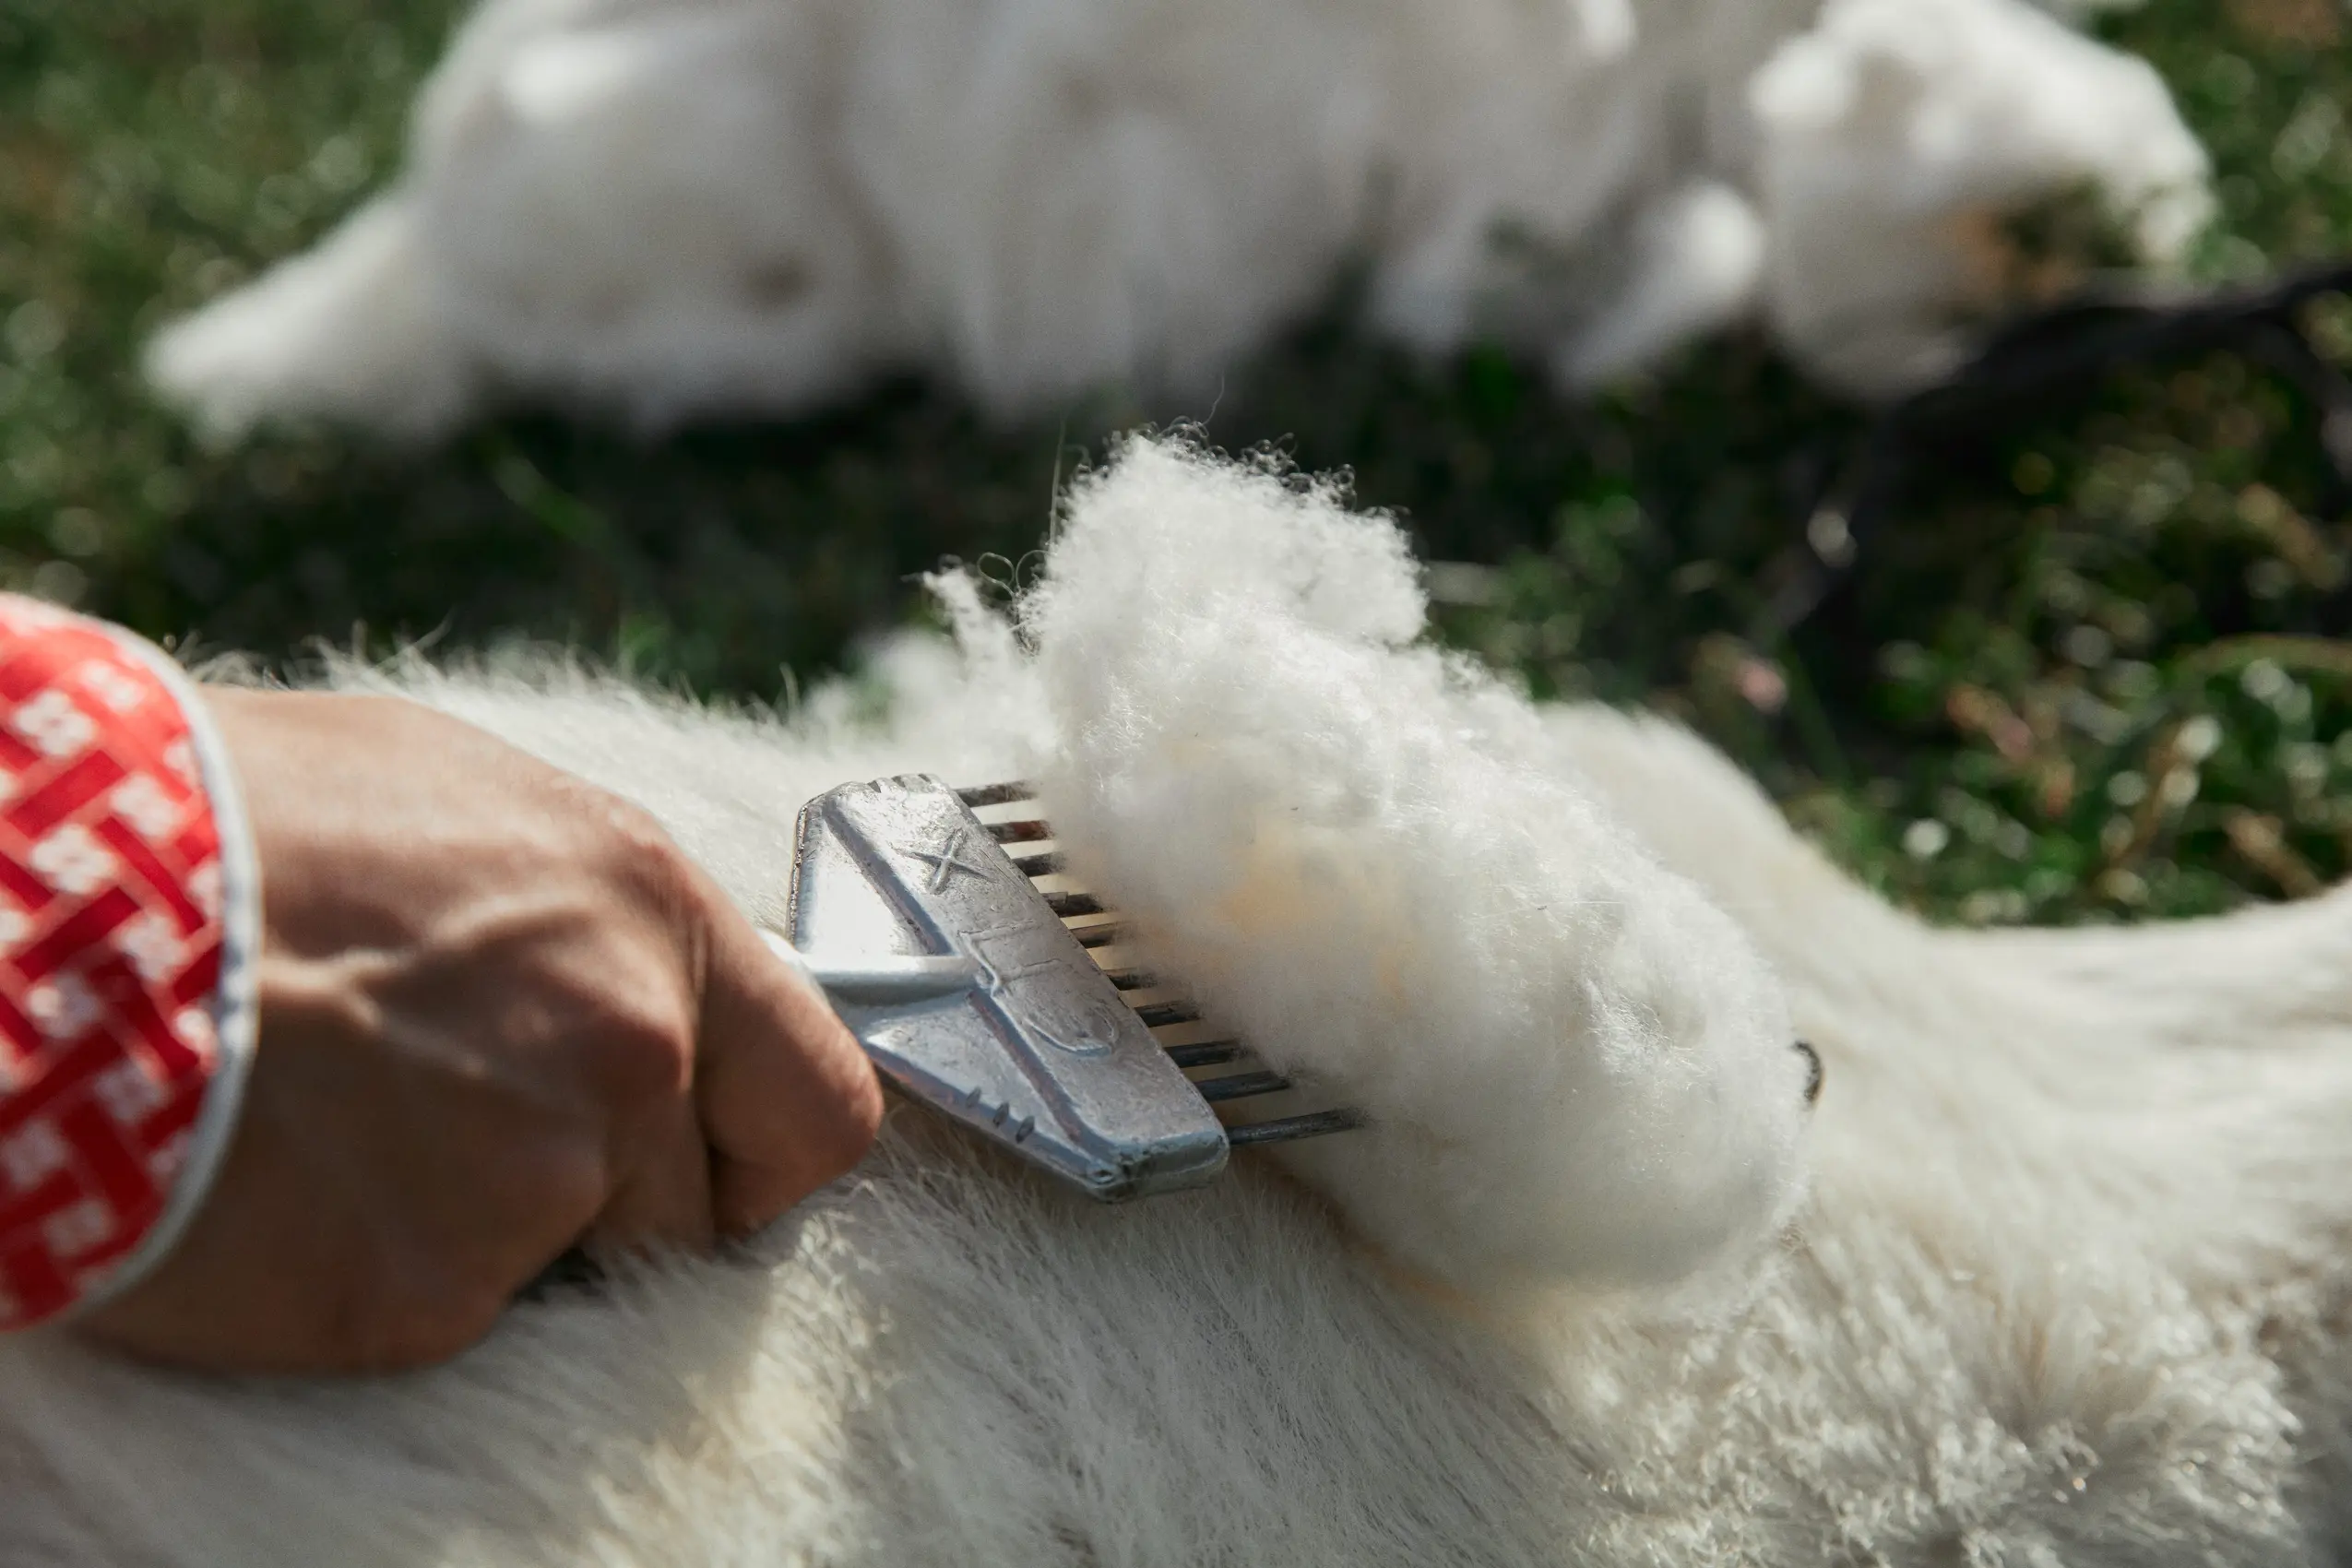 mongolian herder combing cashmere